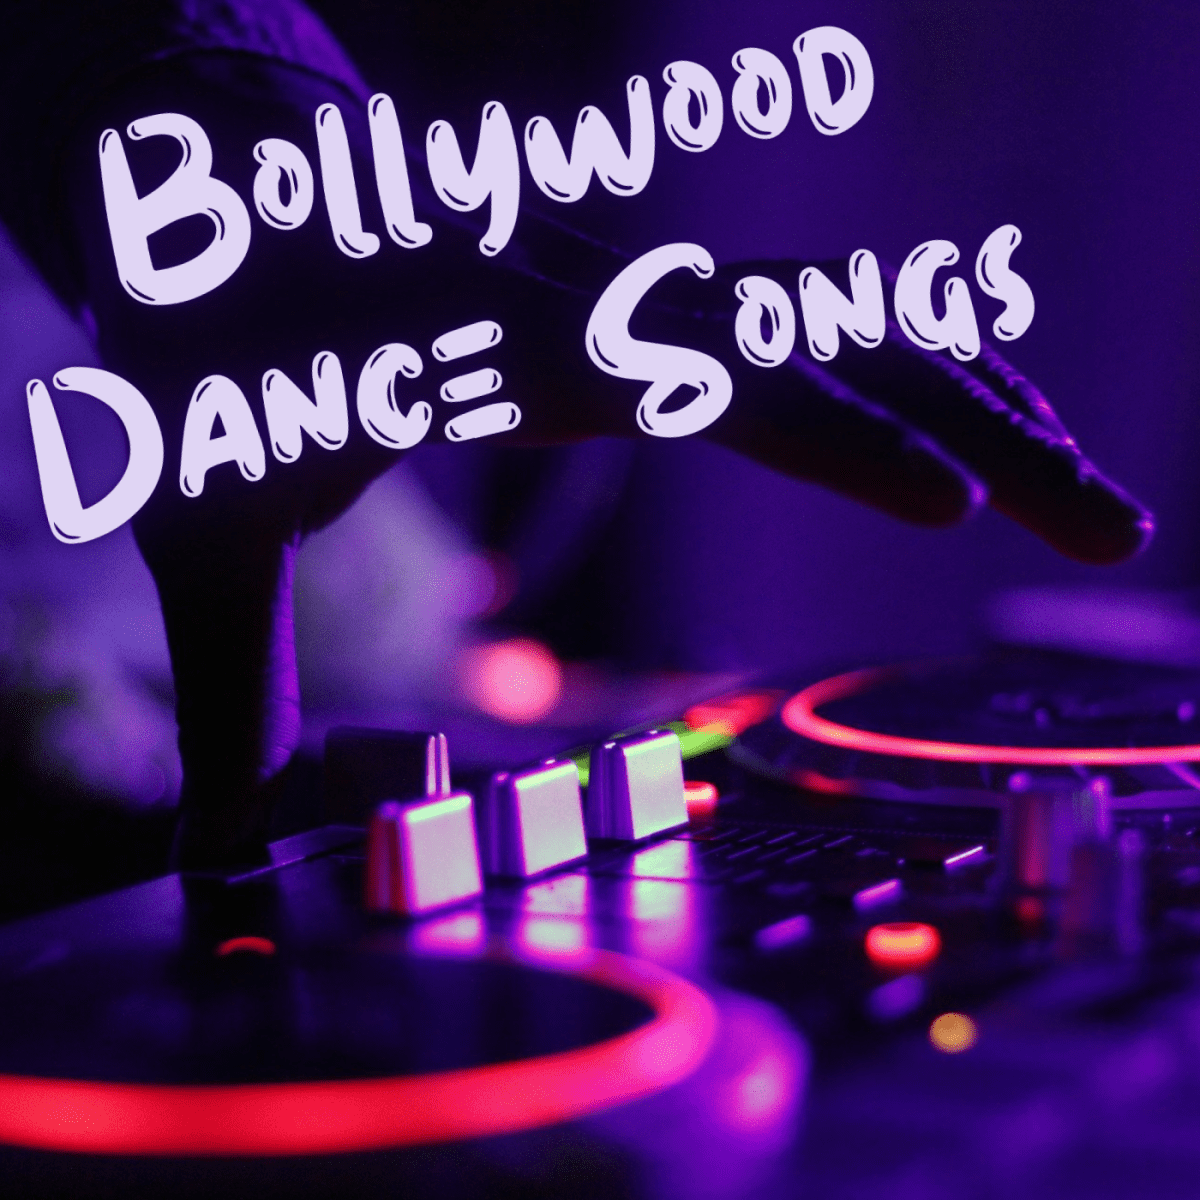 best 2016 hindi songs playlist